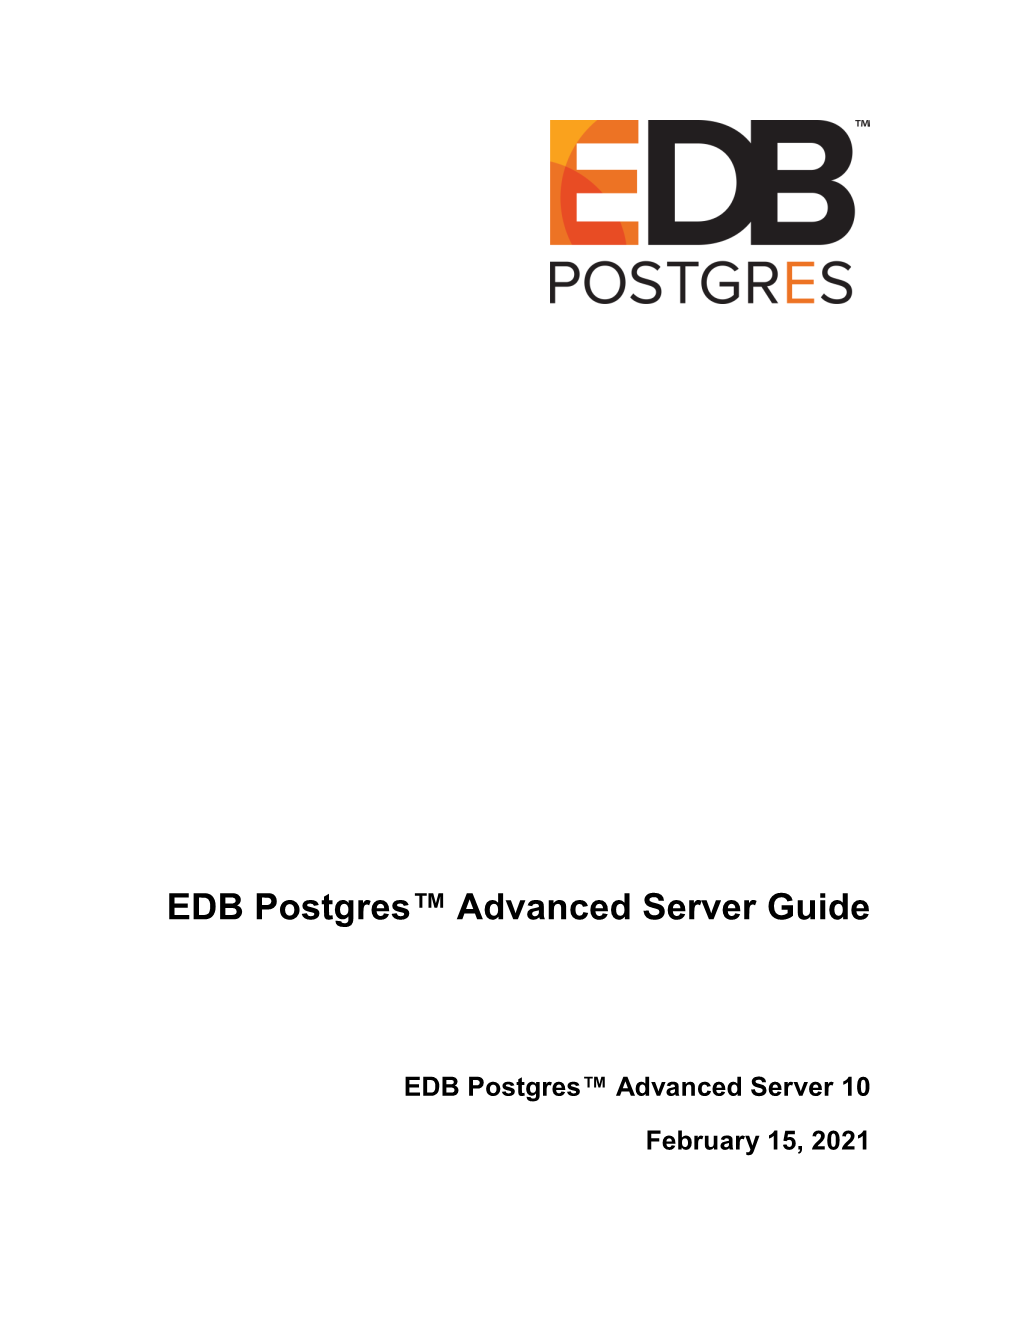 EDB Postgres Enterprise Guide